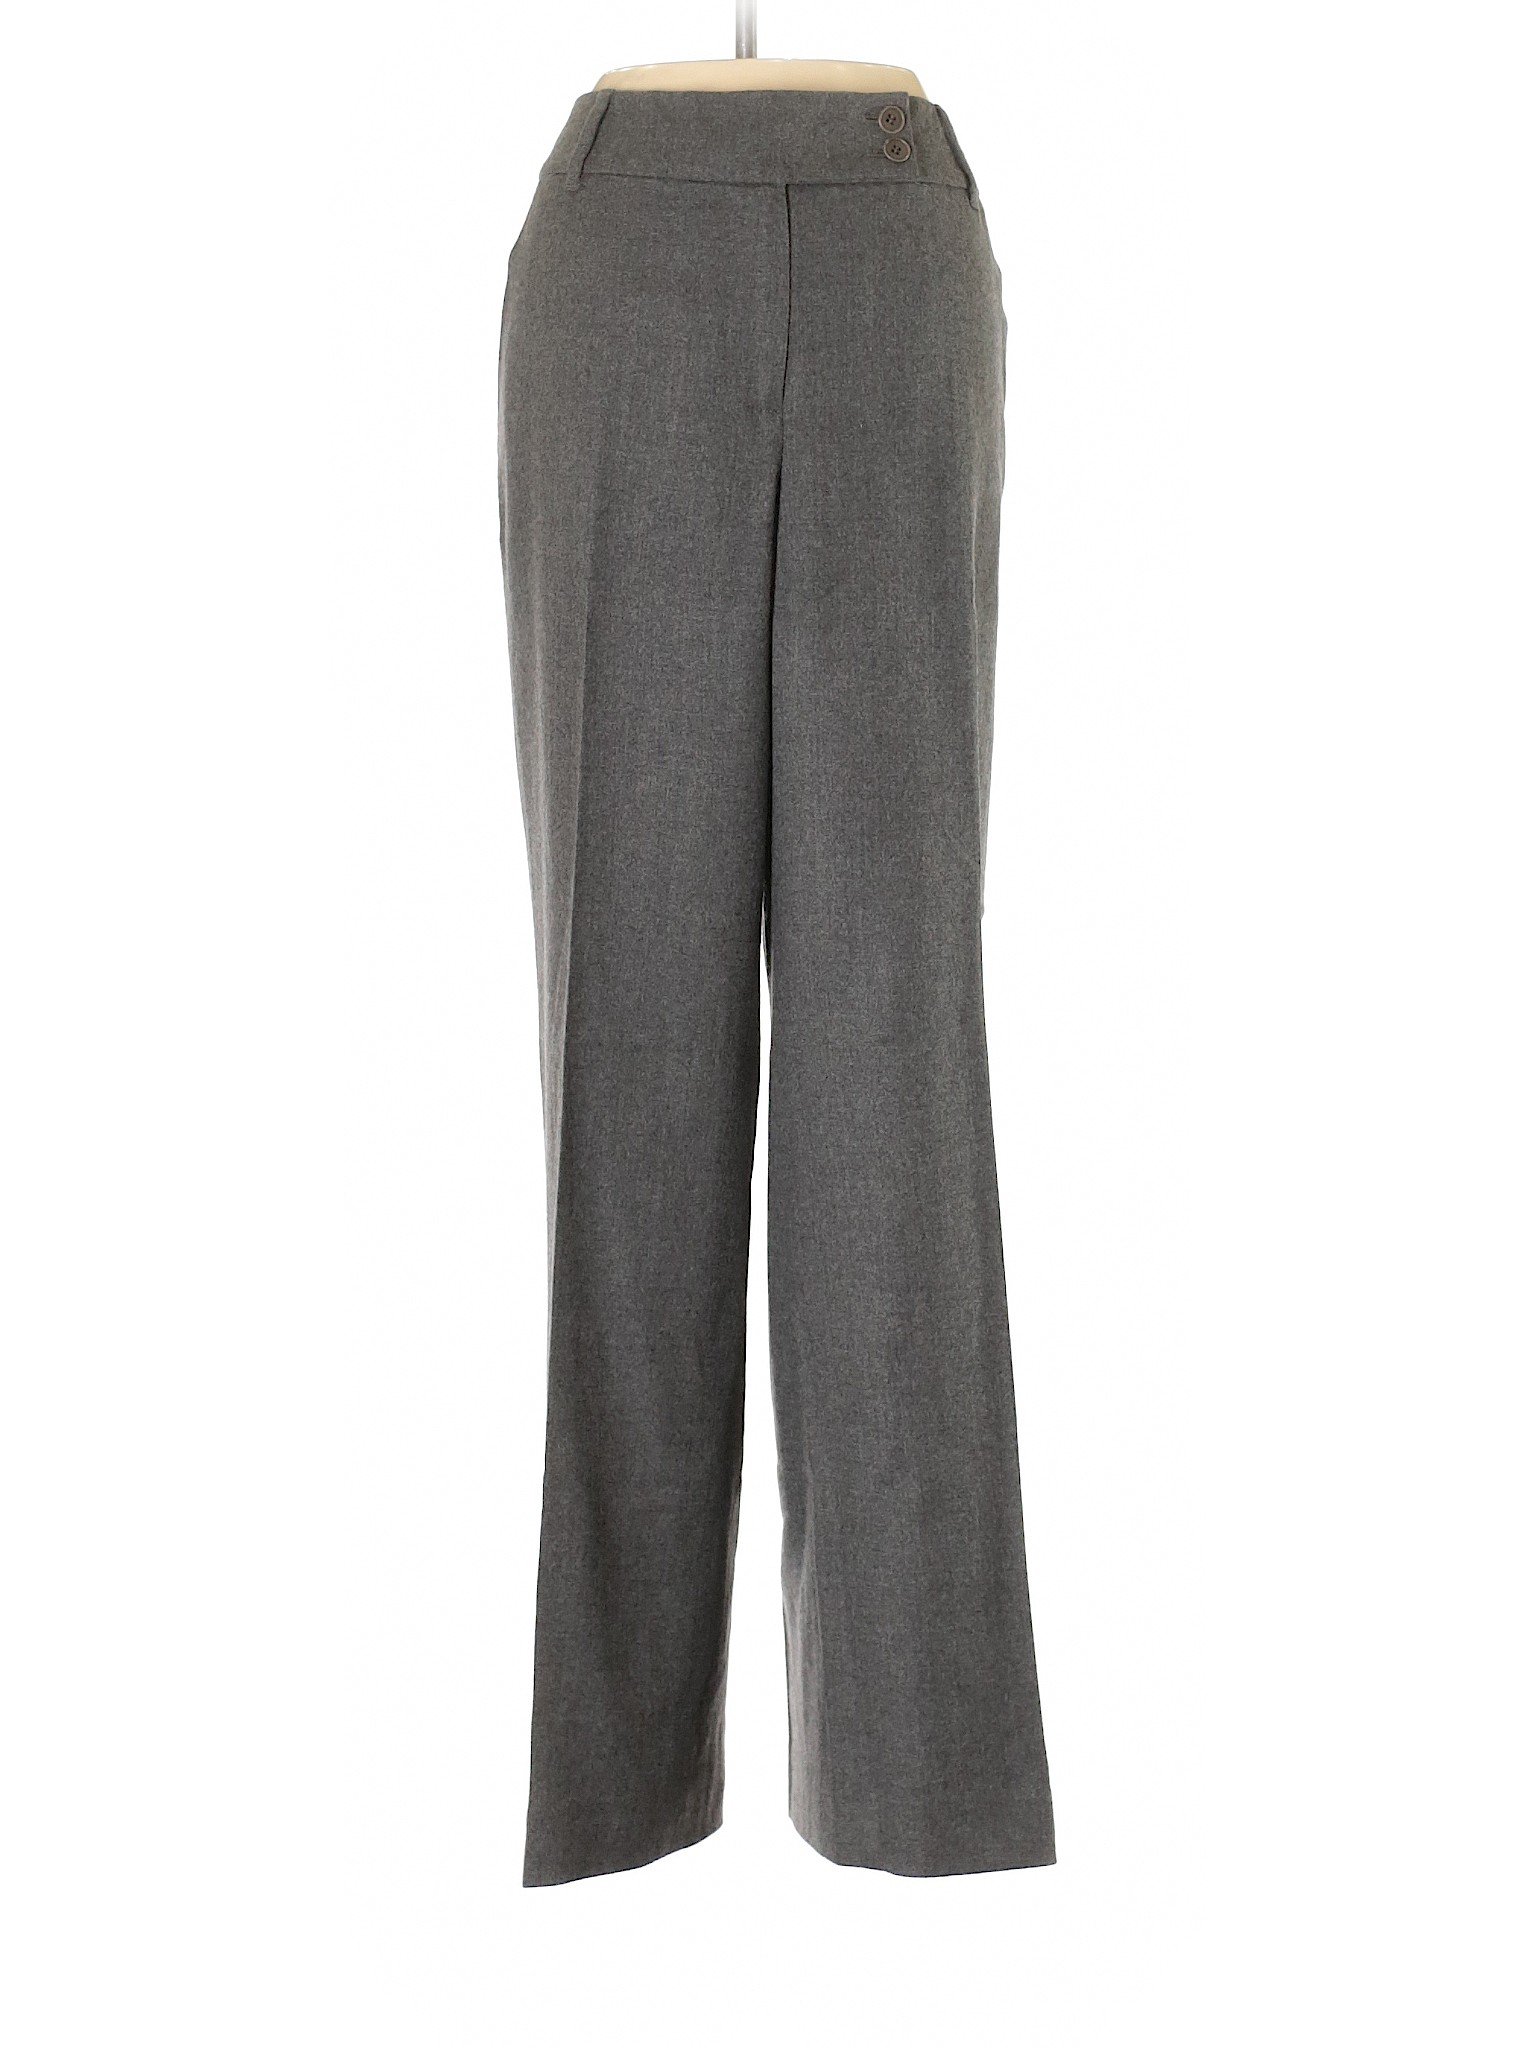 Talbots Women Gray Wool Pants 4 | eBay